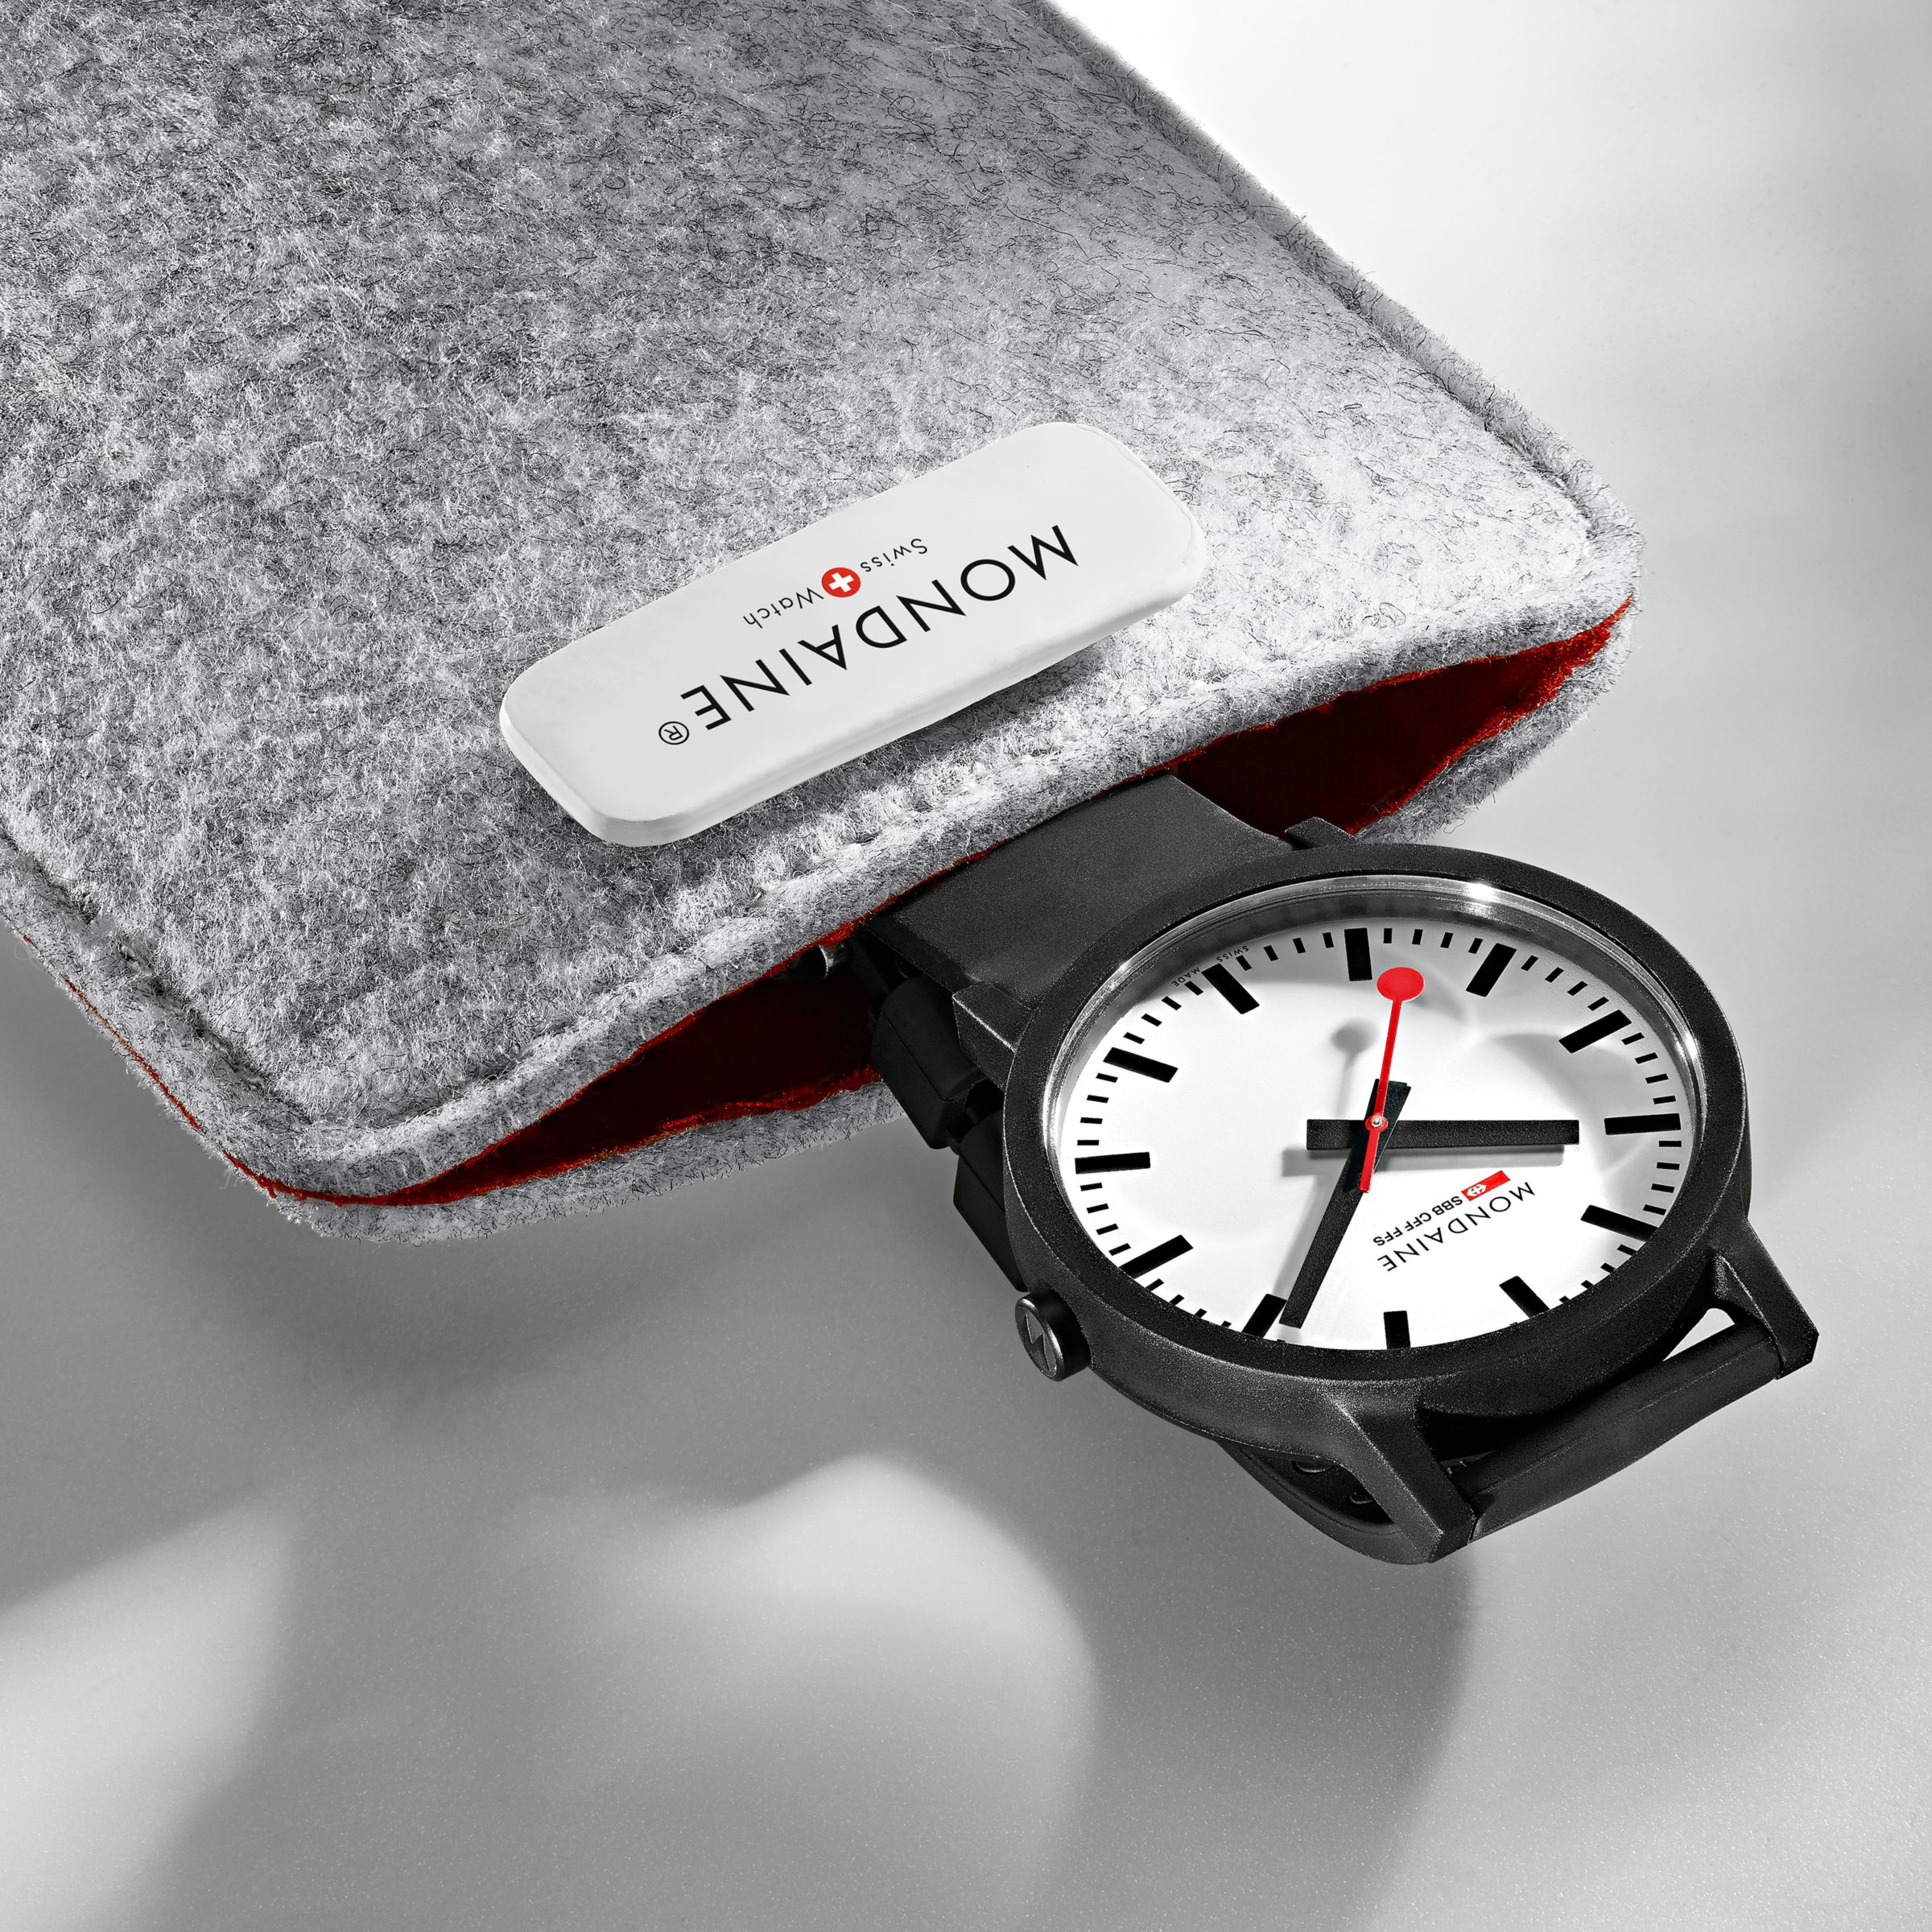 Mondaine Unisex Essence Rubber Strap Watch, Black/White MS1.41110.RB